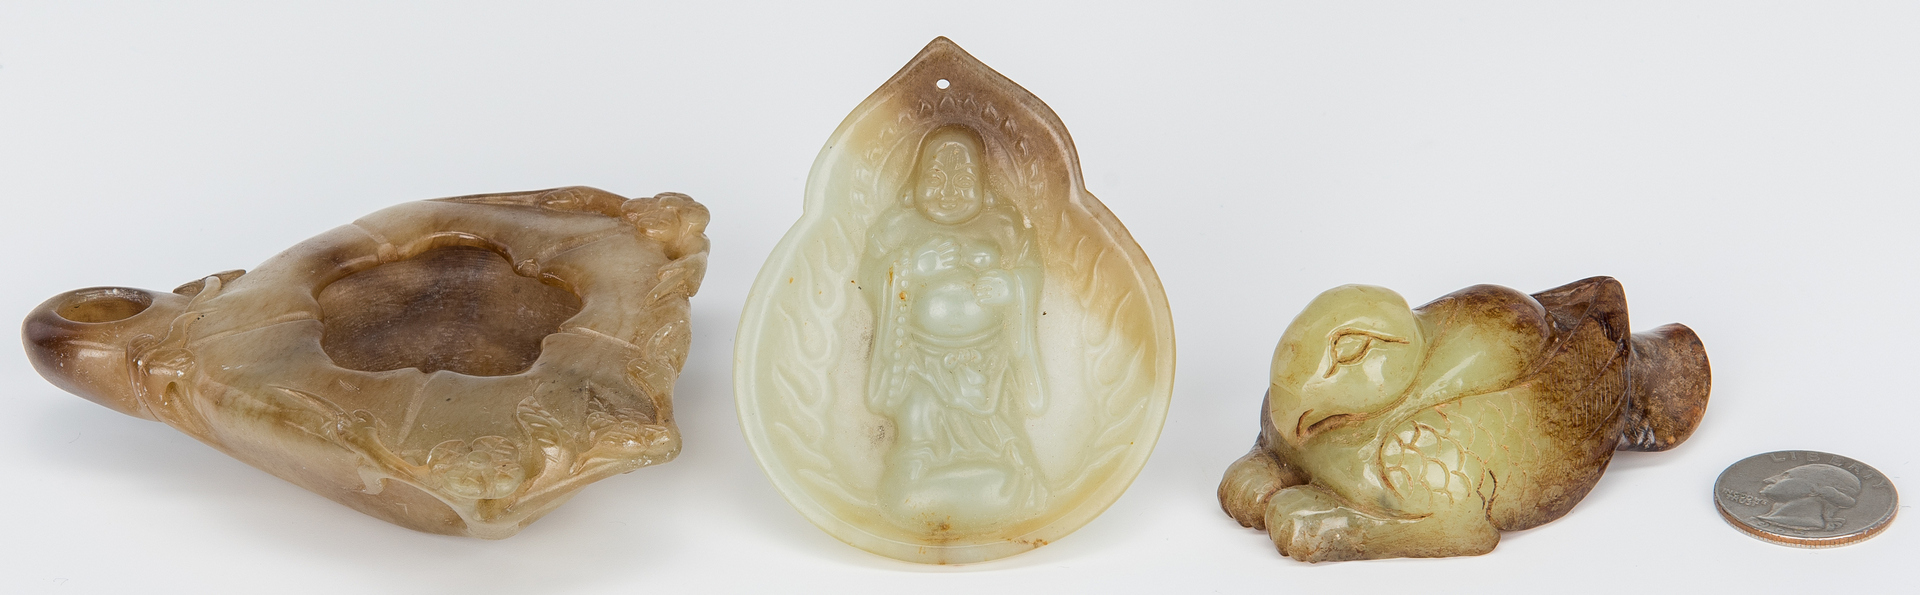 Lot 324: 3 Chinese Jade Items, incl. Buddha, Brush Pot & Bird